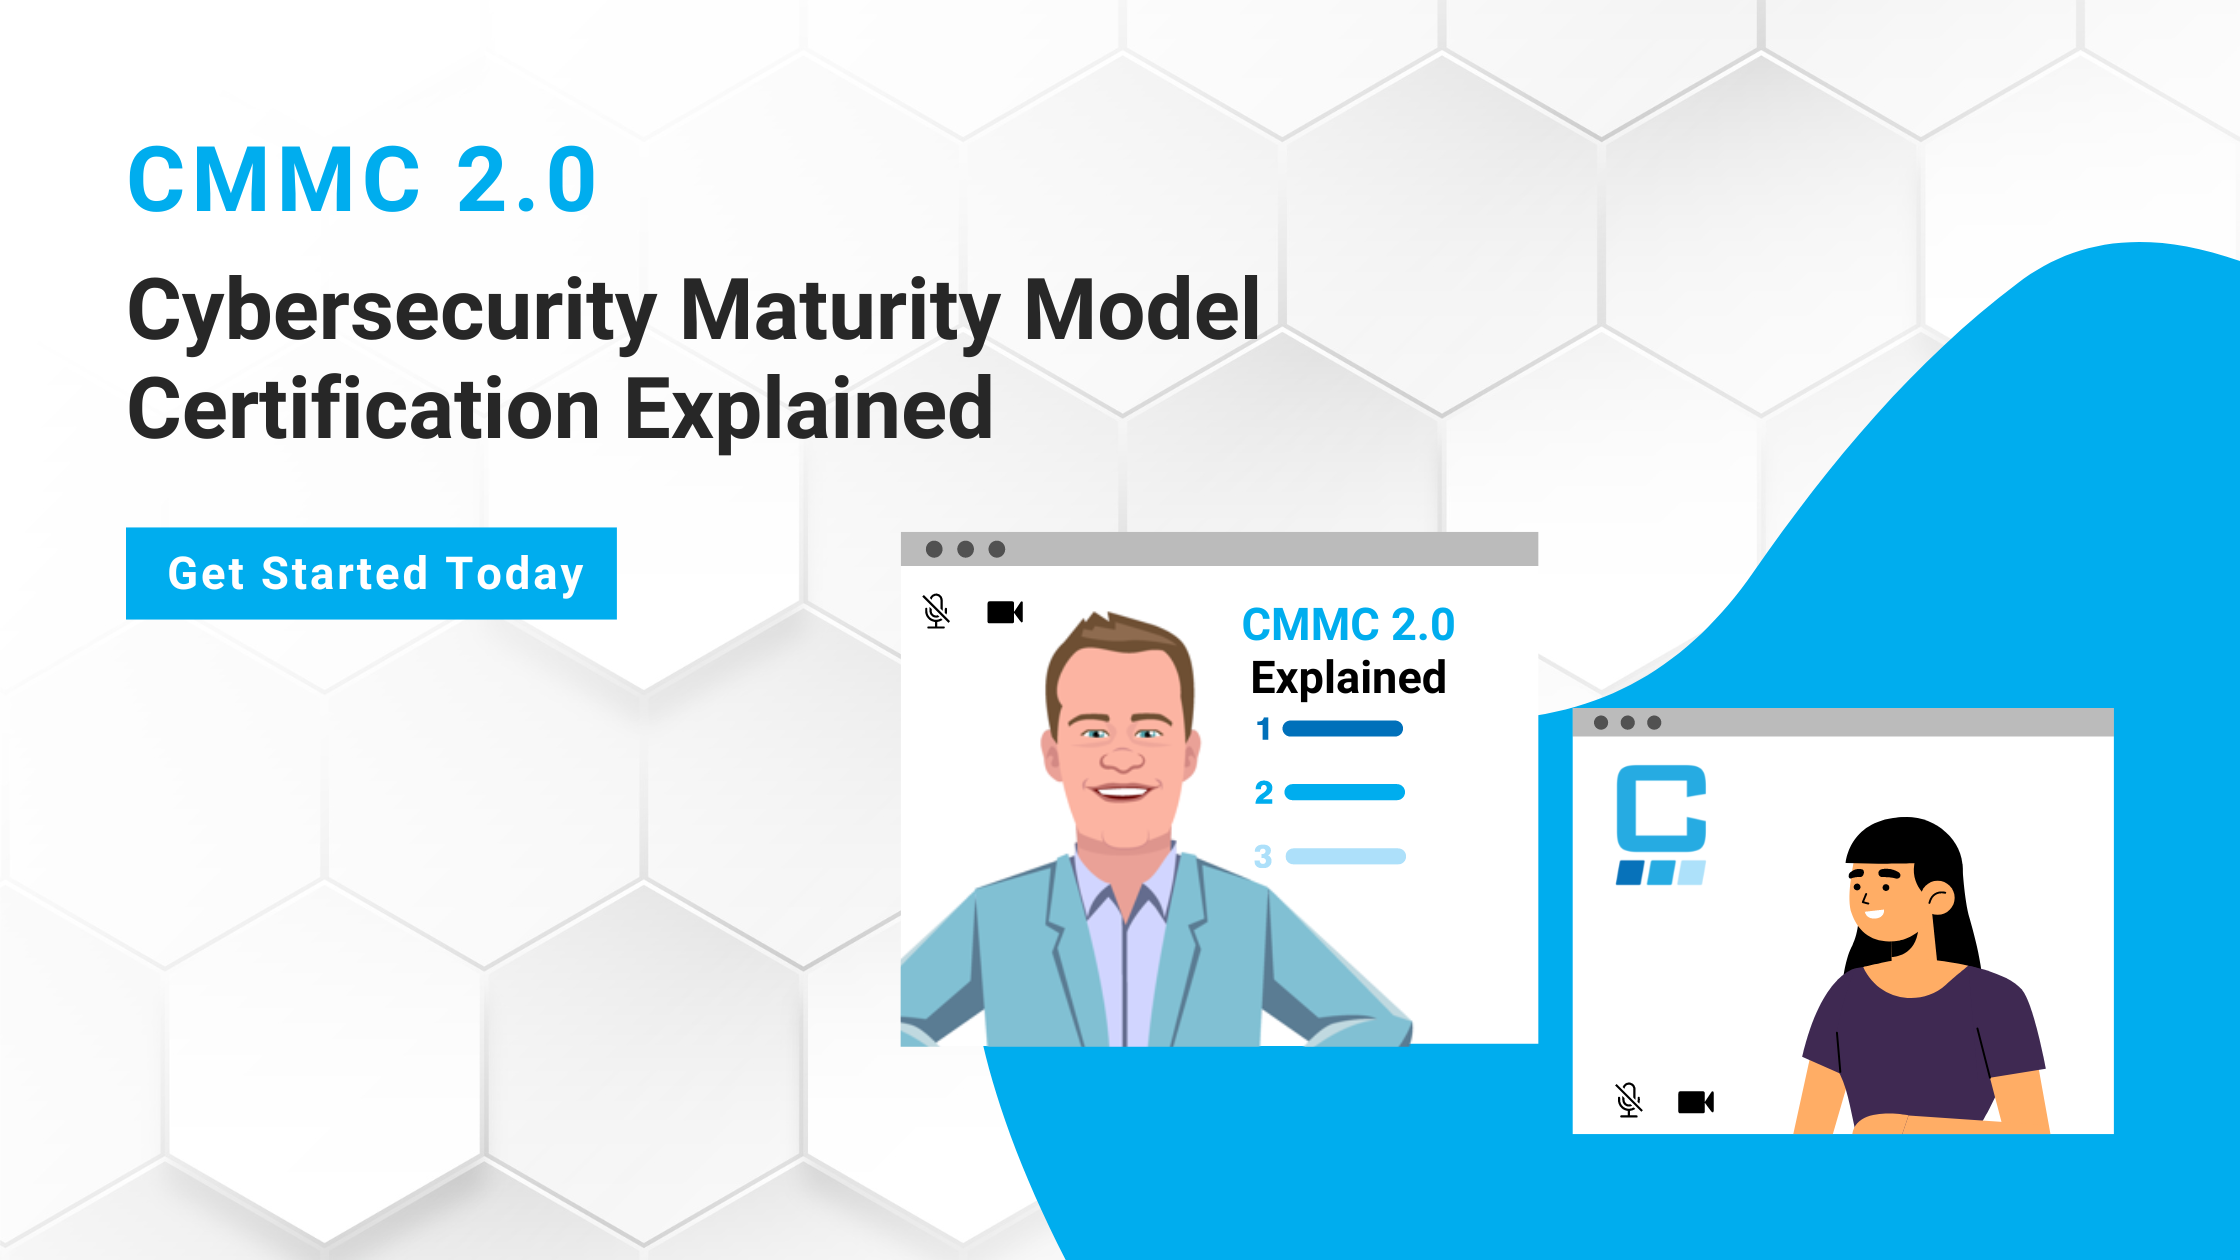 Cybersecurity Maturity Model Certification Explained: CMMC 2.0